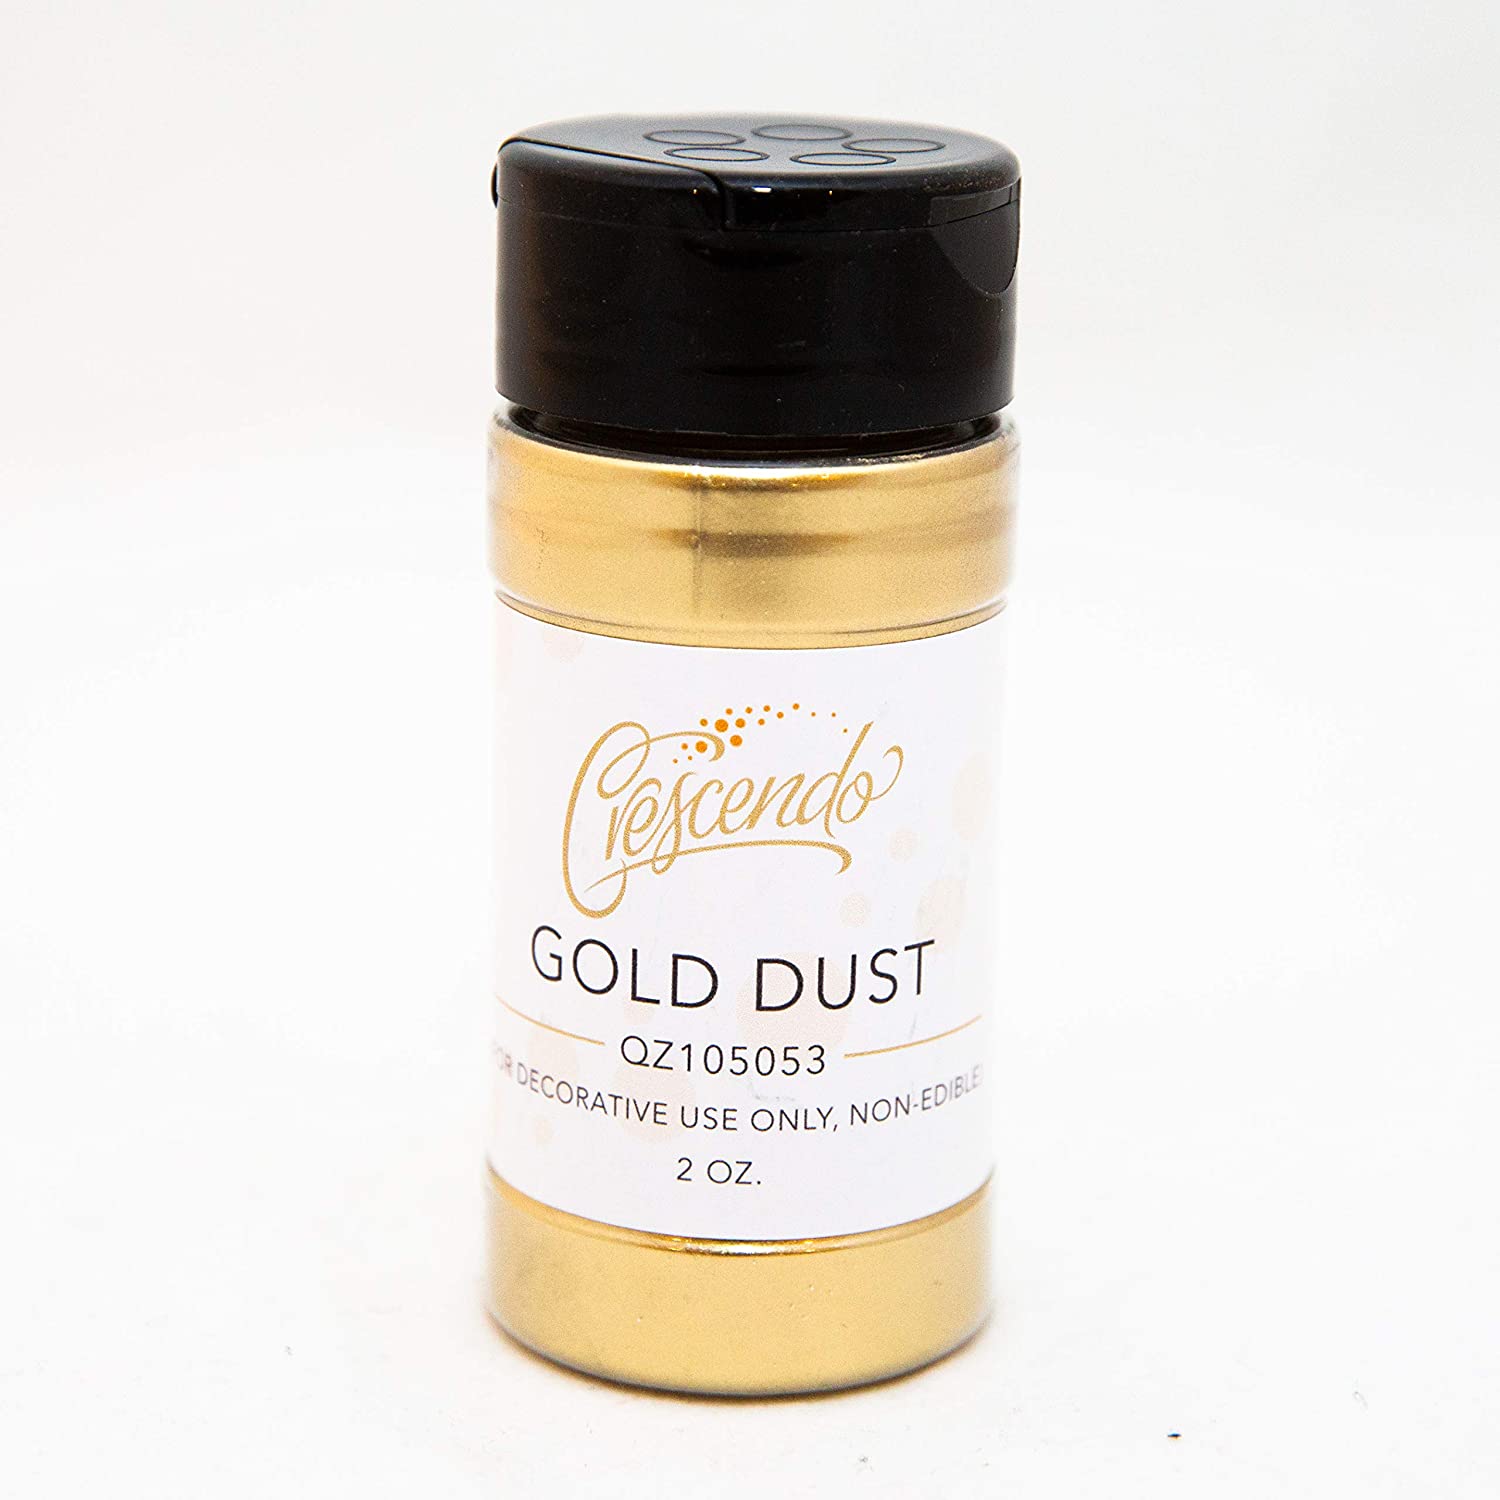 Crescendo Gold Dust - Decorative Metallics Lustre Dust 2oz